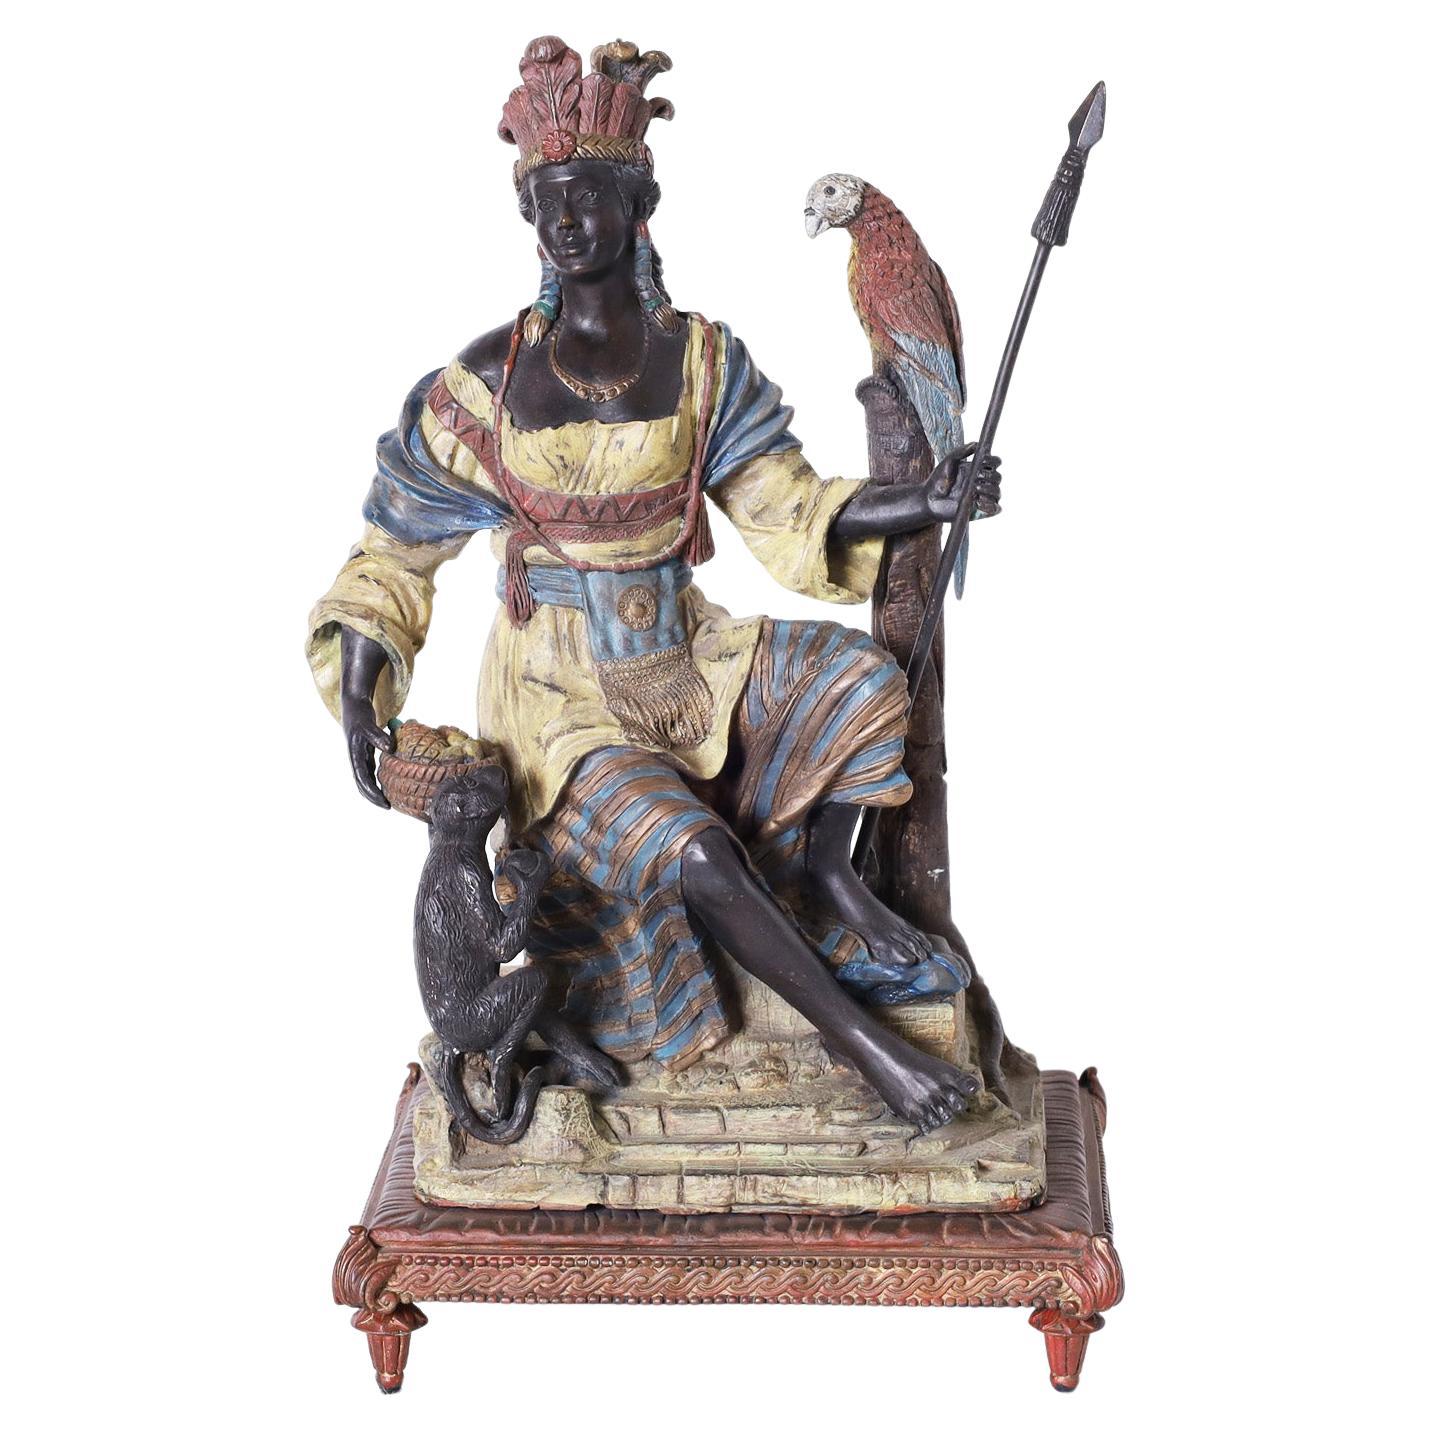 Figurine orientaliste figurative en bronze peint à froid